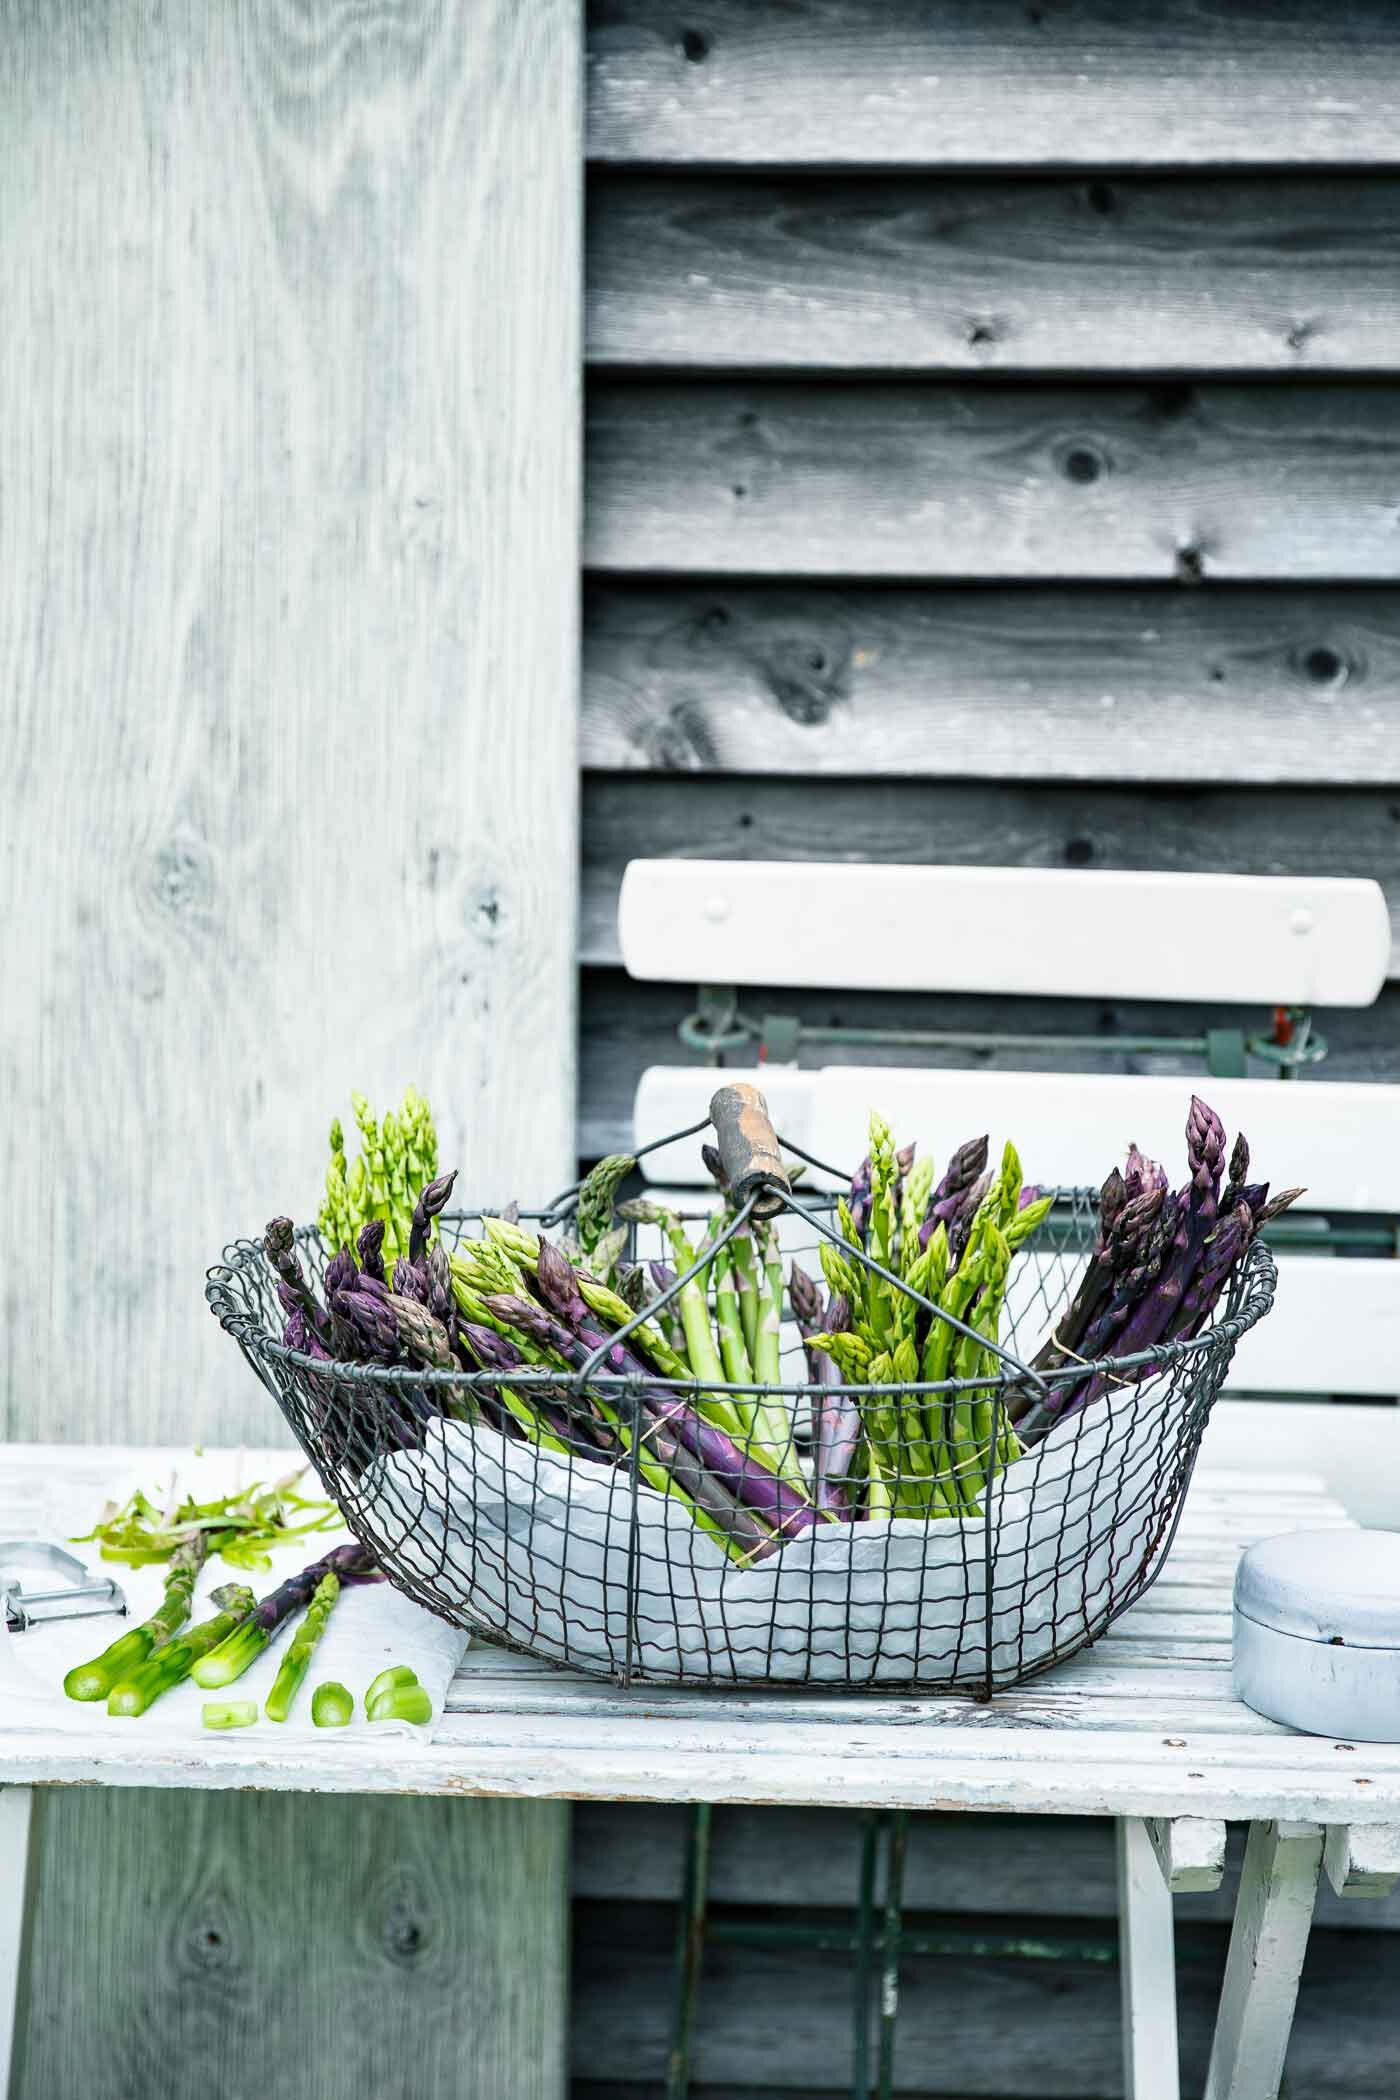 spargel-im-korb-gruener-violetter-spargel-reportage-veggielicious-food-fotografie-57-dt-hoch.jpg